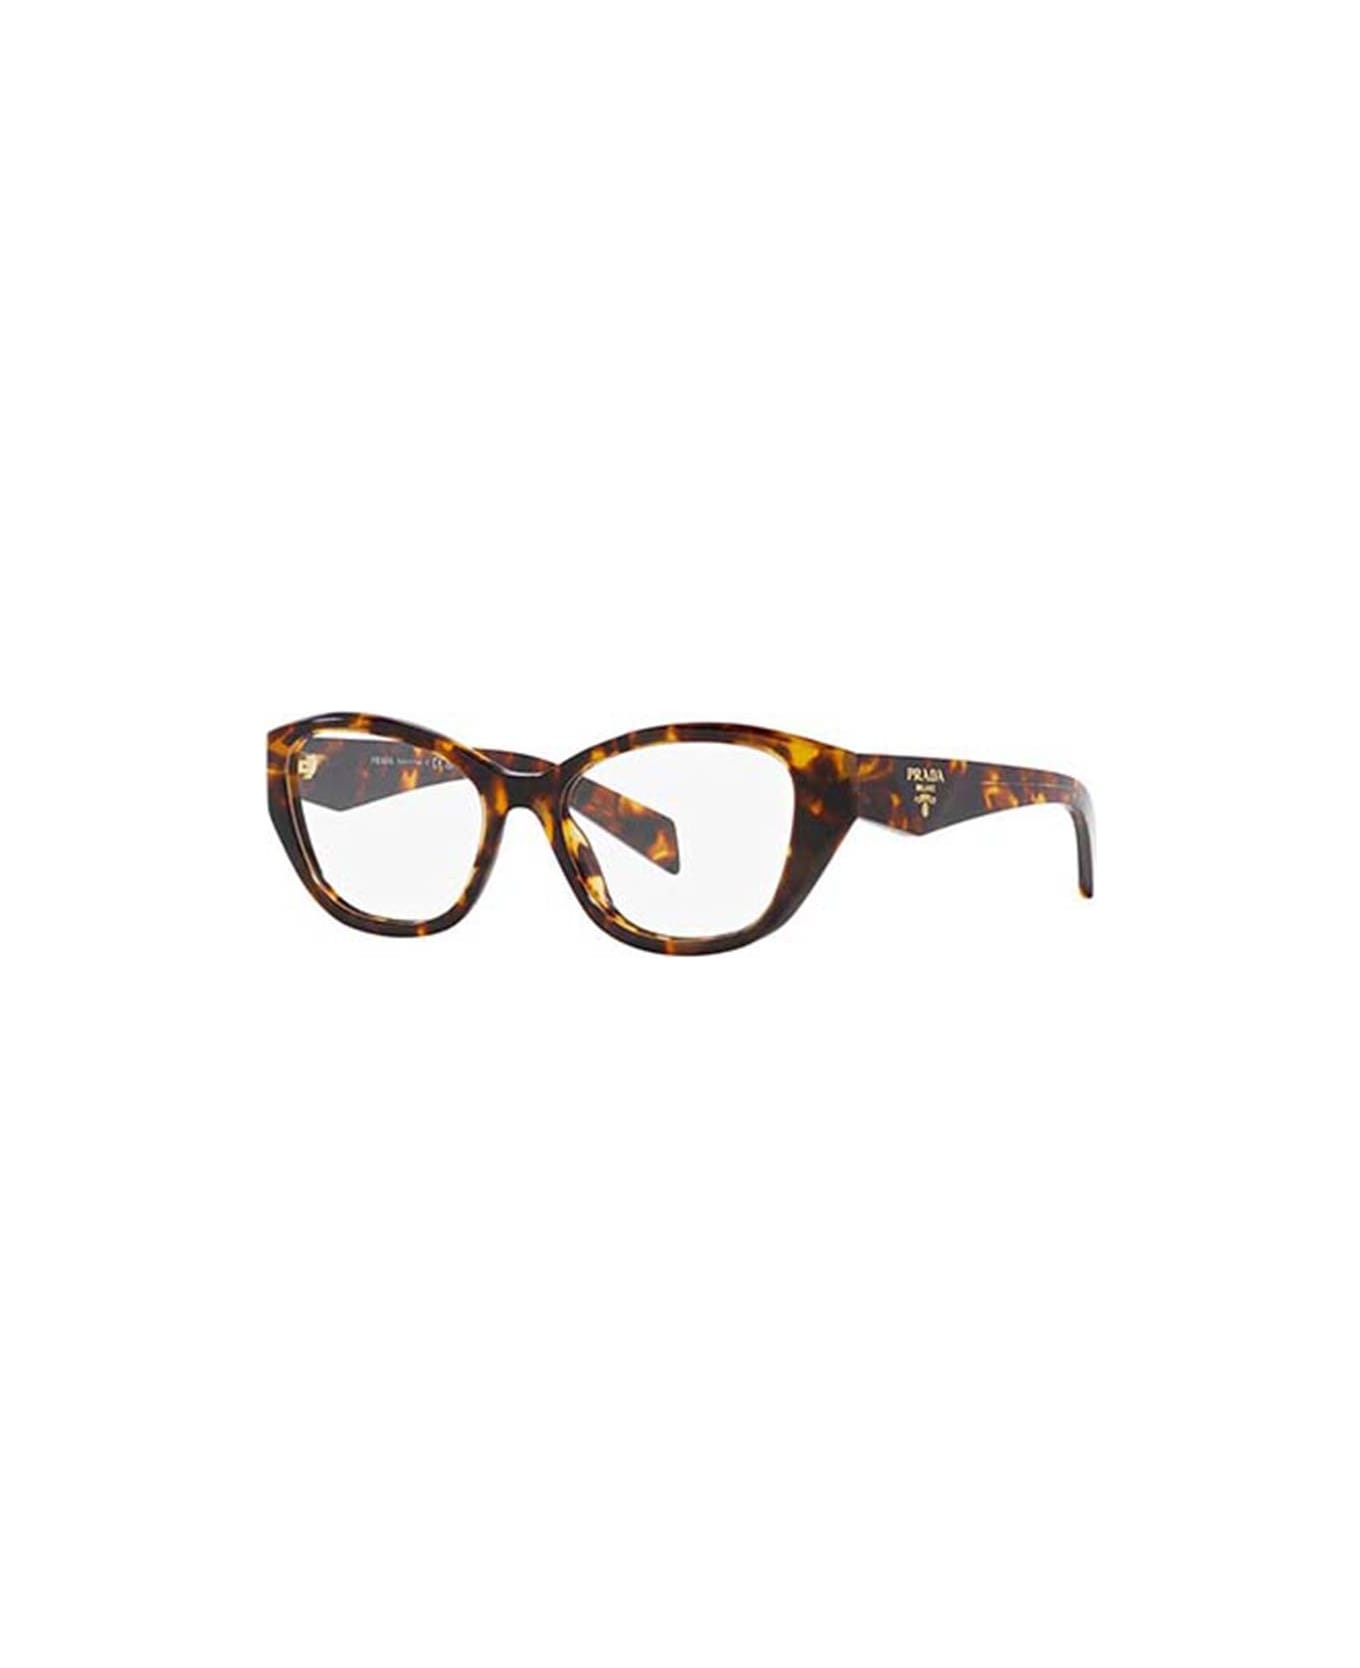 Prada Eyewear Glasses - 14L1O1 アイウェア